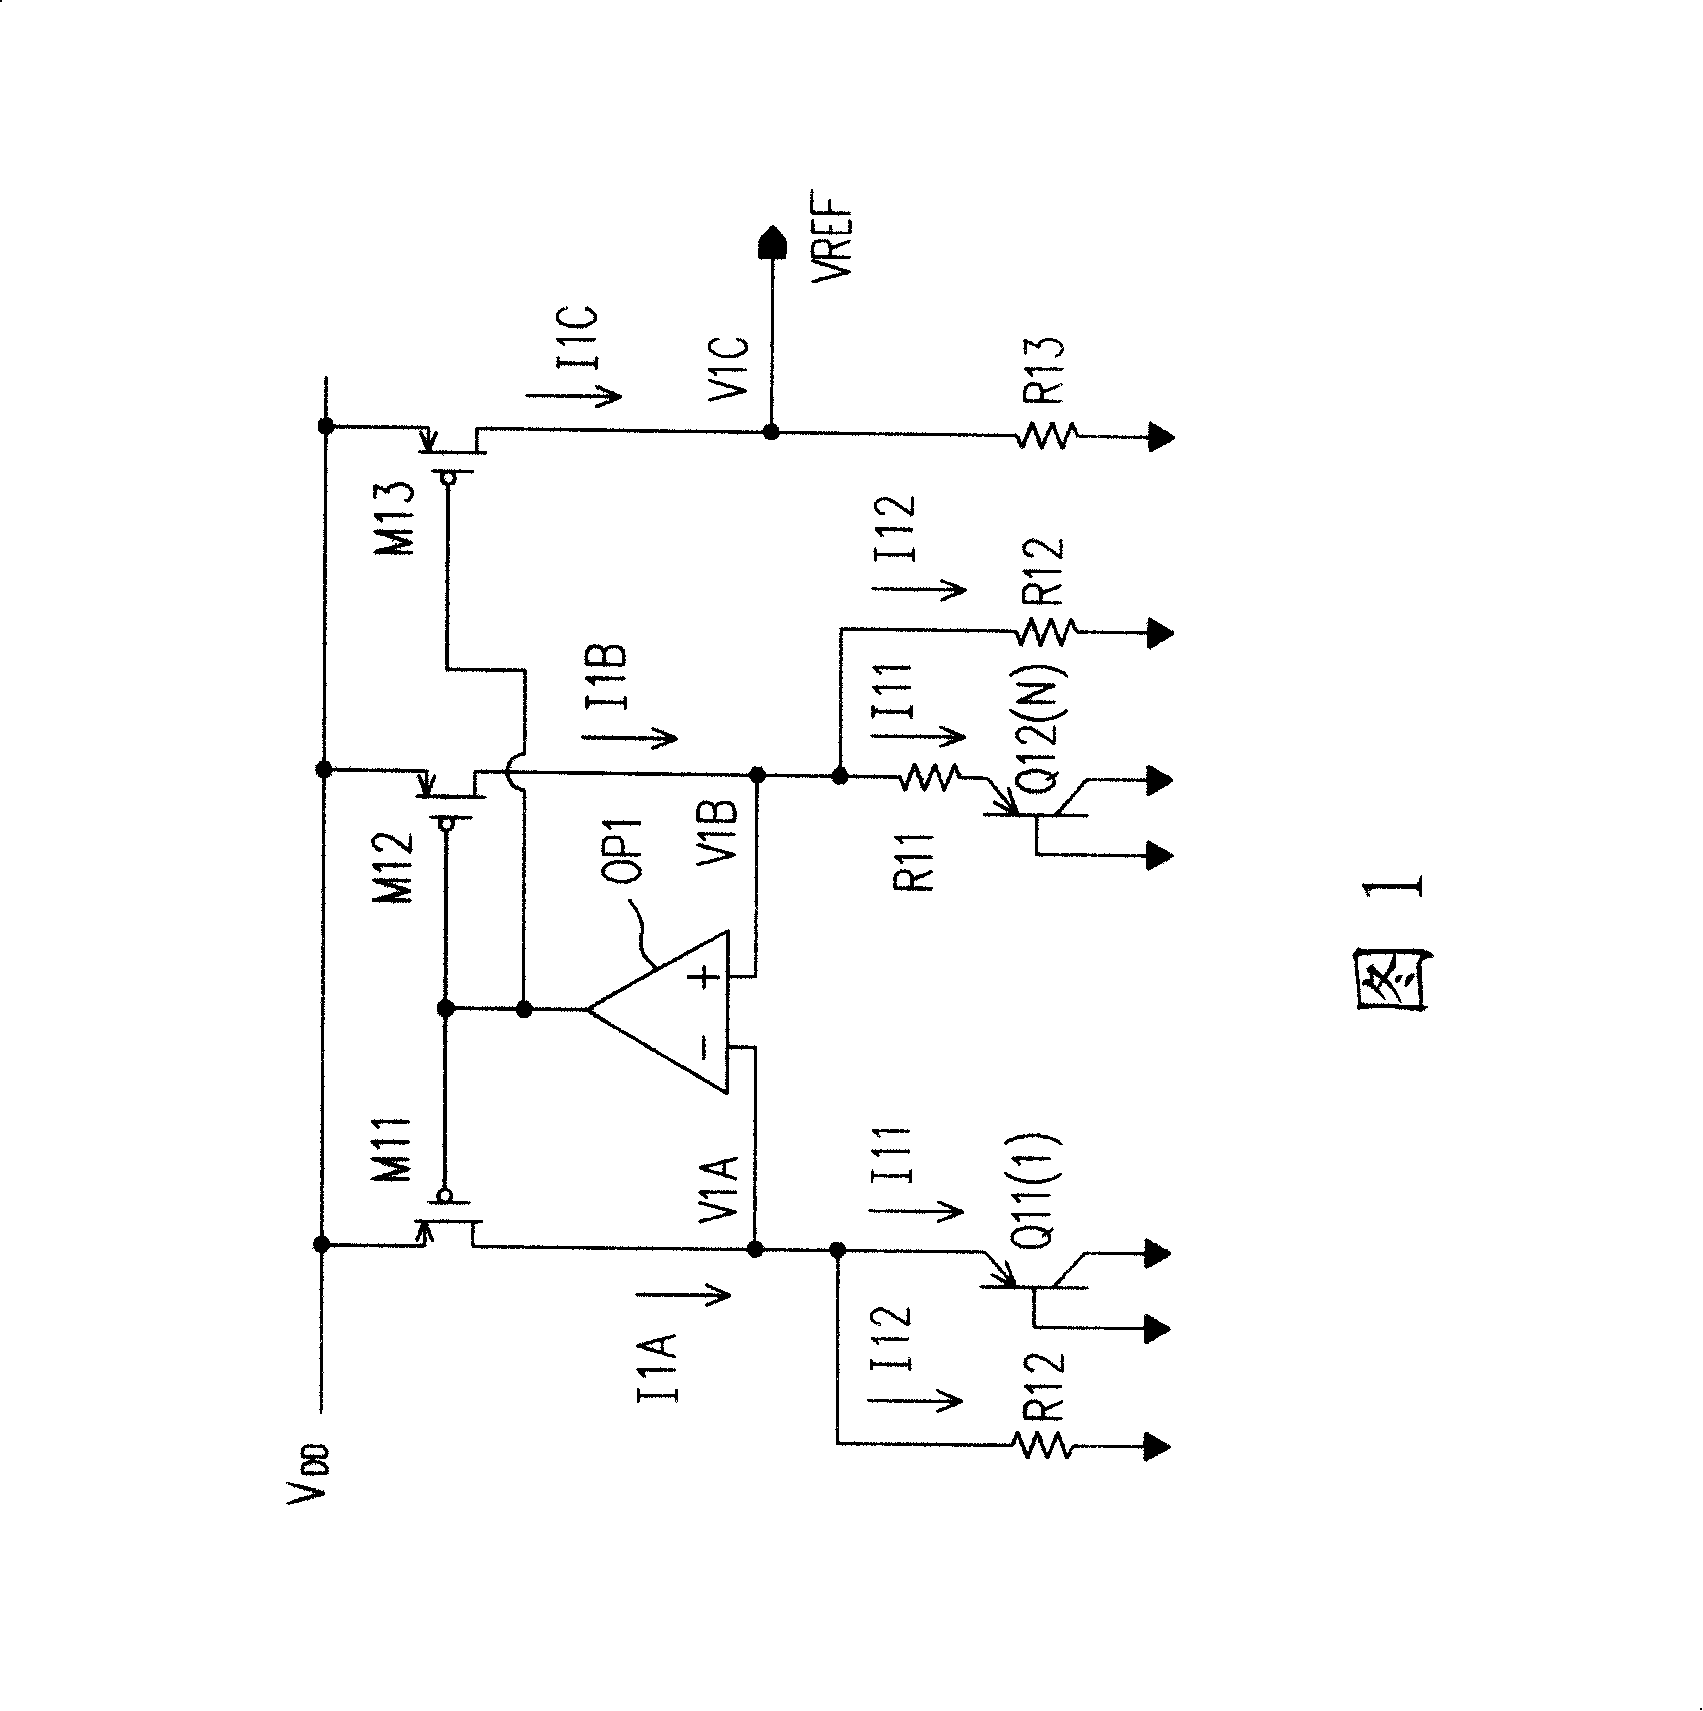 Energy-gap reference circuit